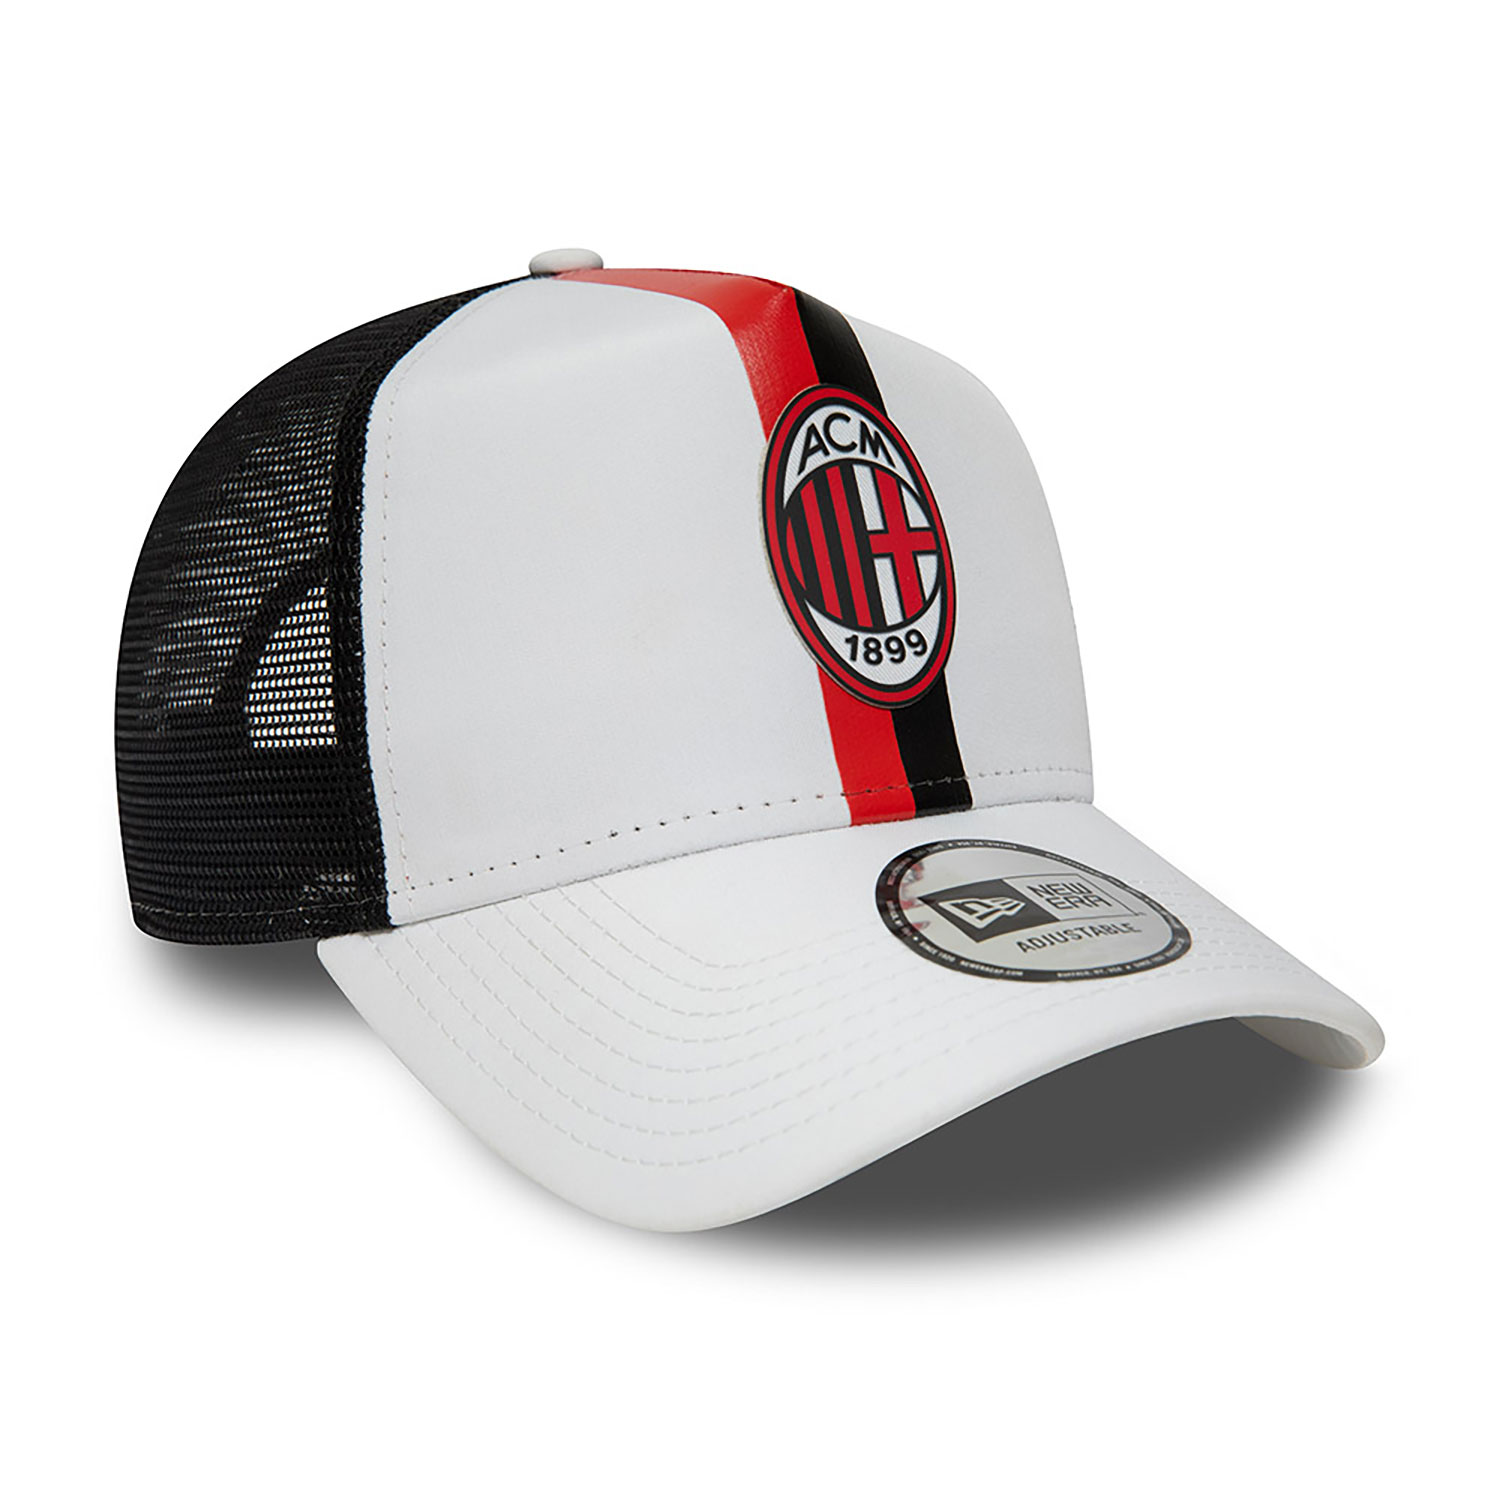 New Era x AC Milan Trucker Cap With Logo